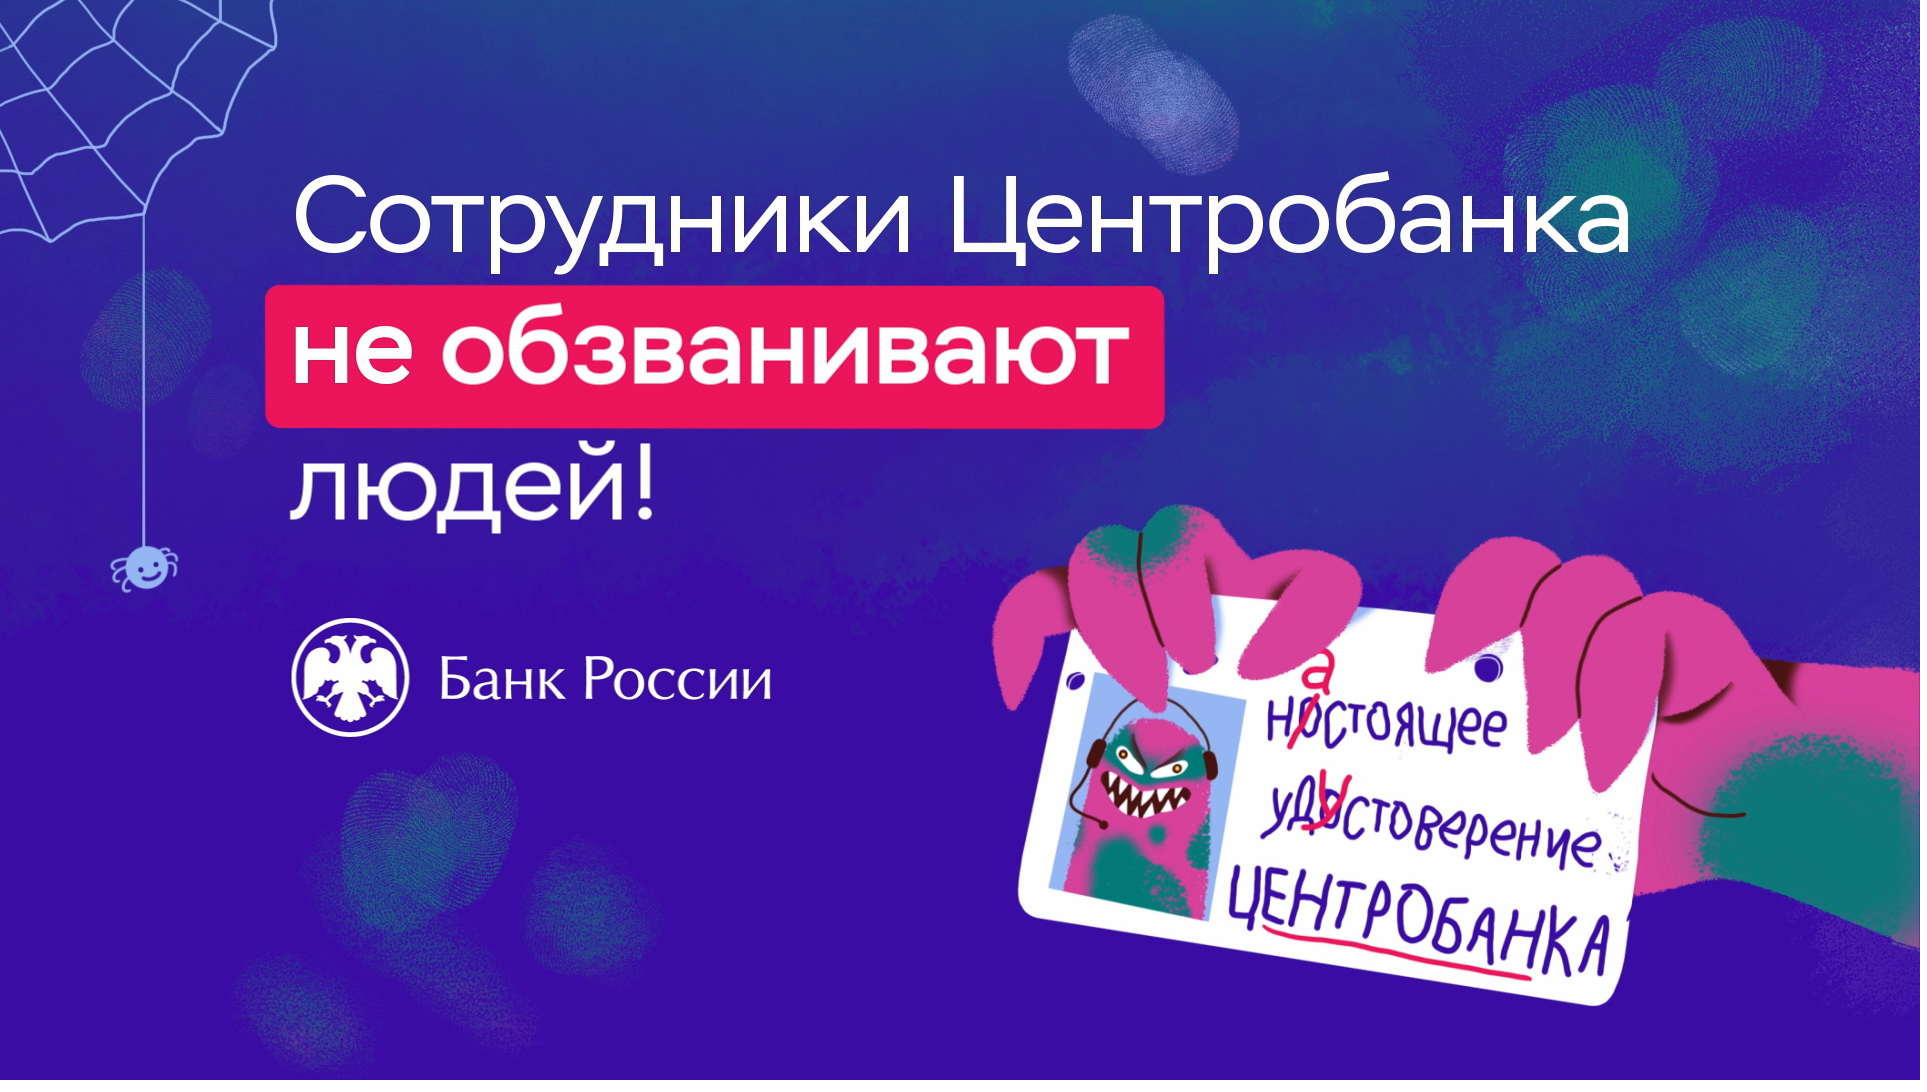 Видеоролик Банка России: сотрудники Центробанка не обзванивают людей.